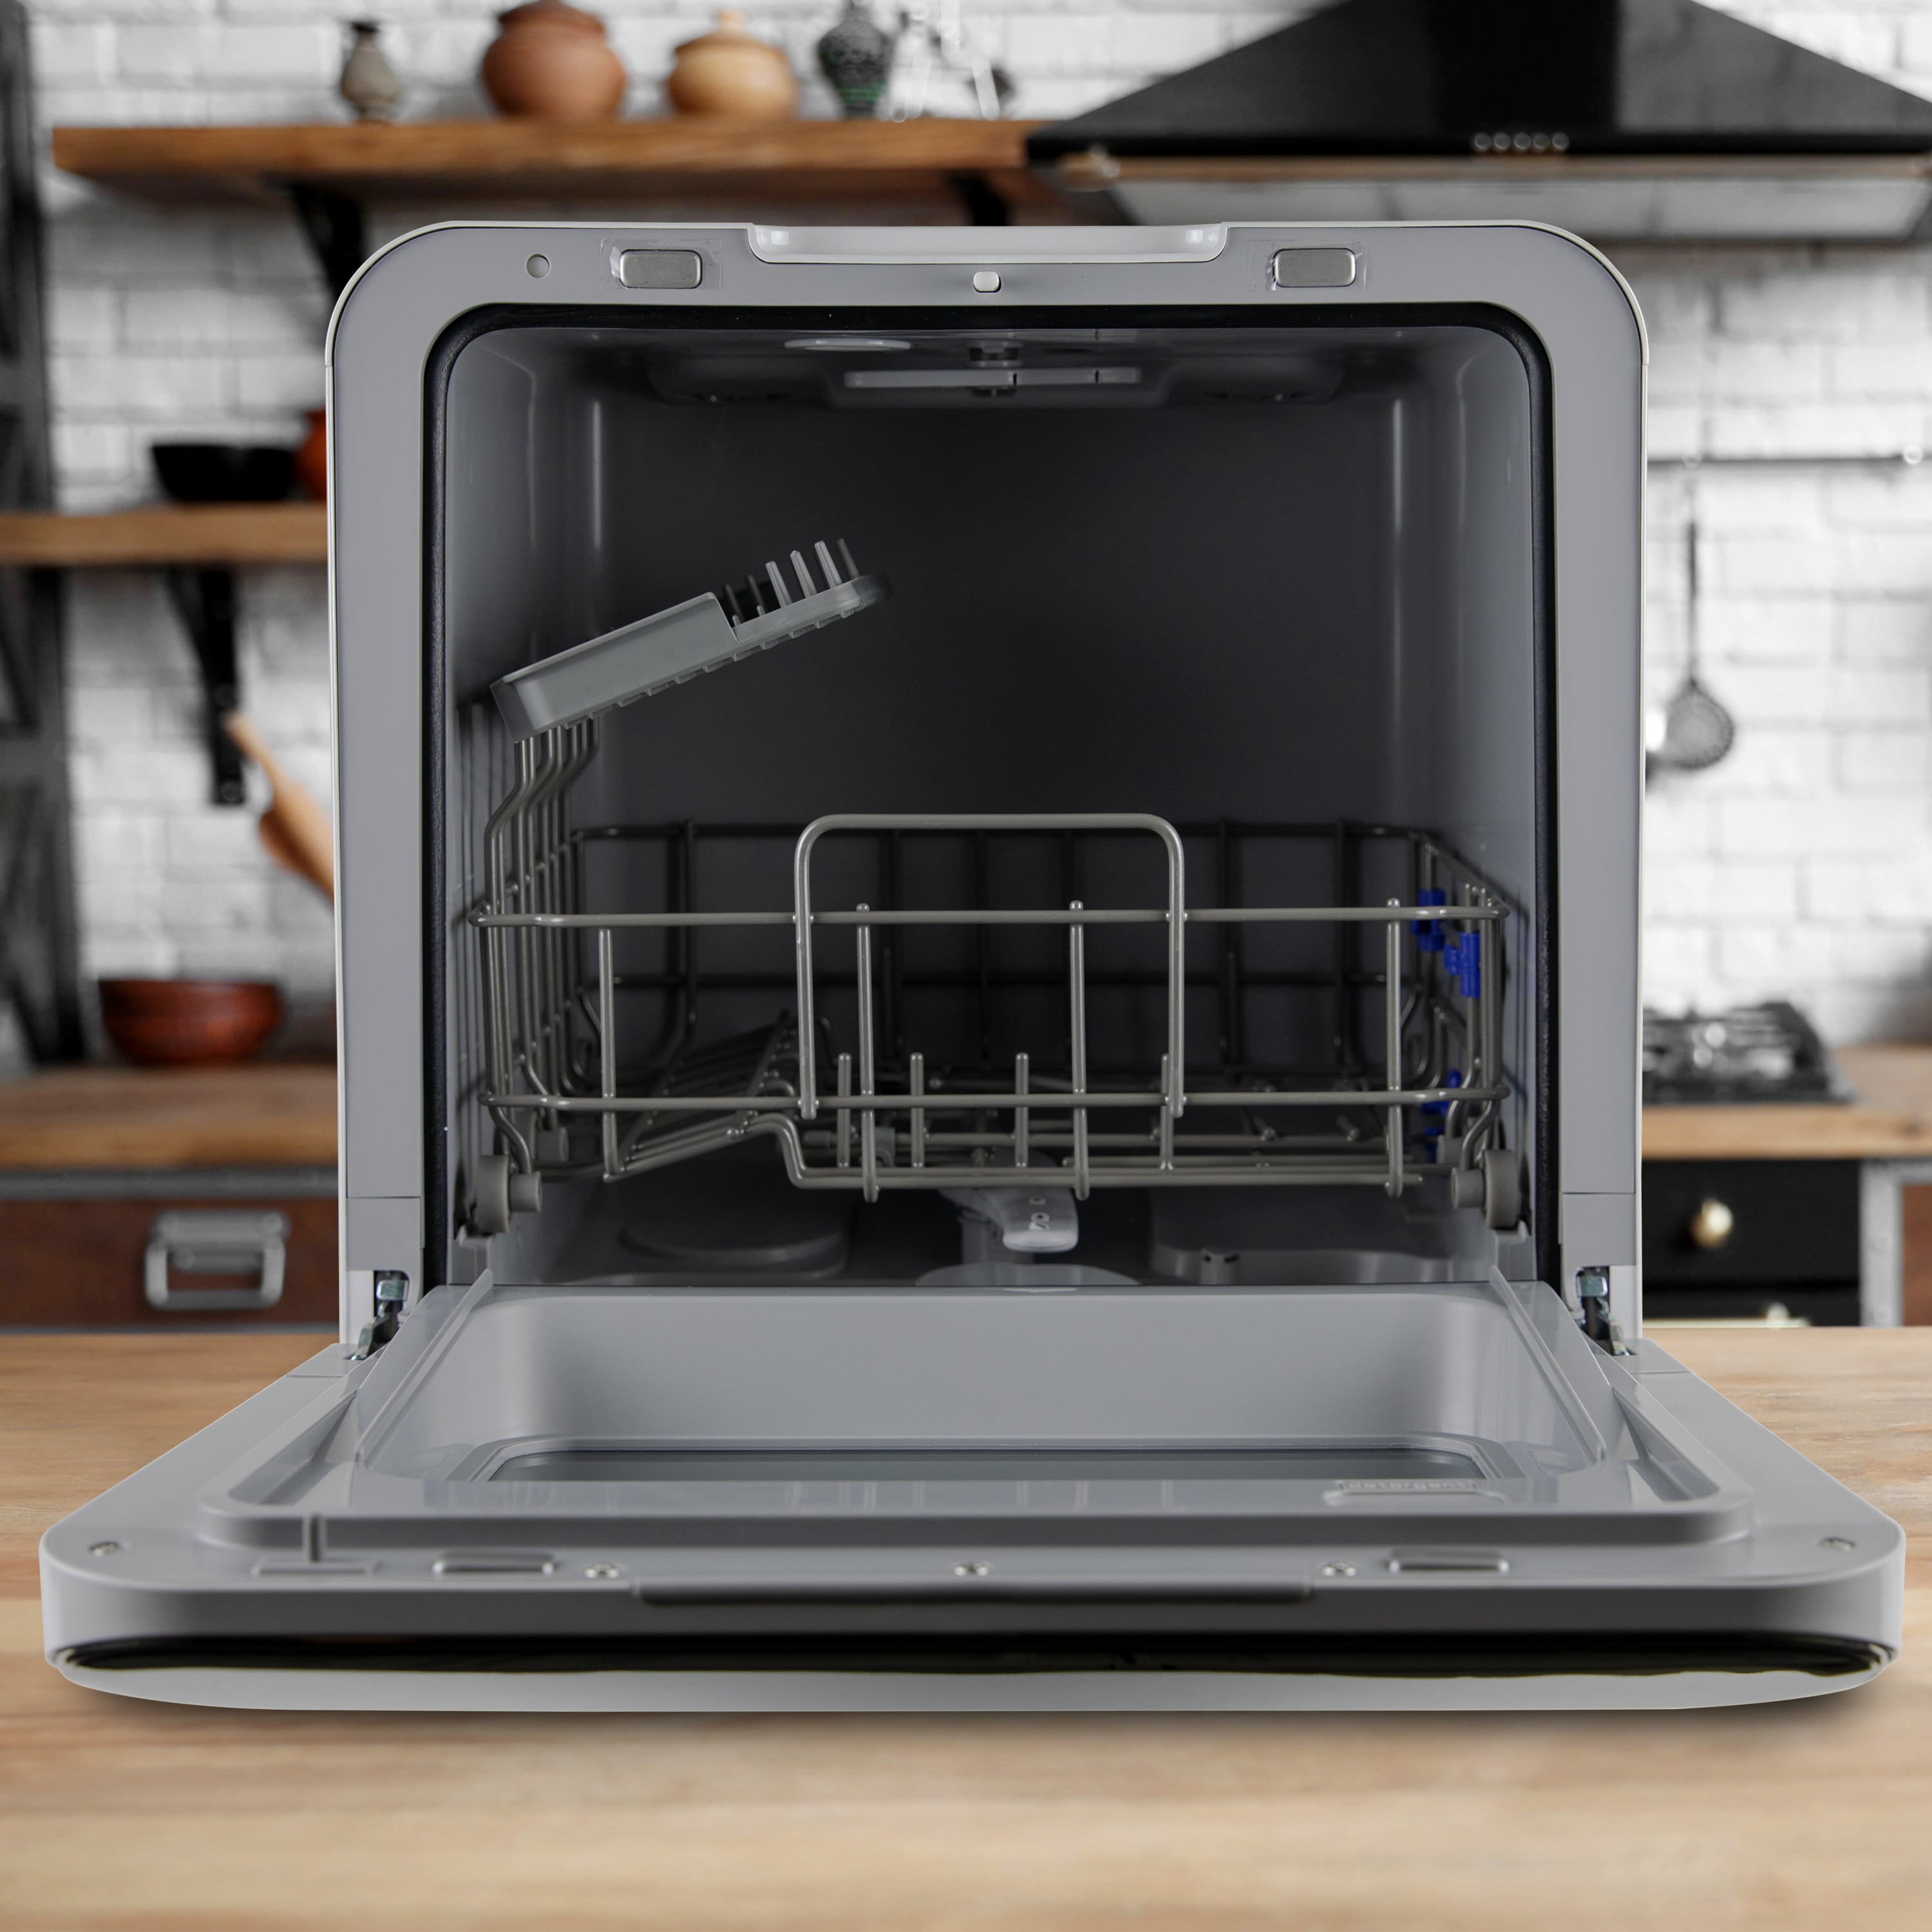 Farberware Portable Countertop Dishwasher - Dishwashers - Lees